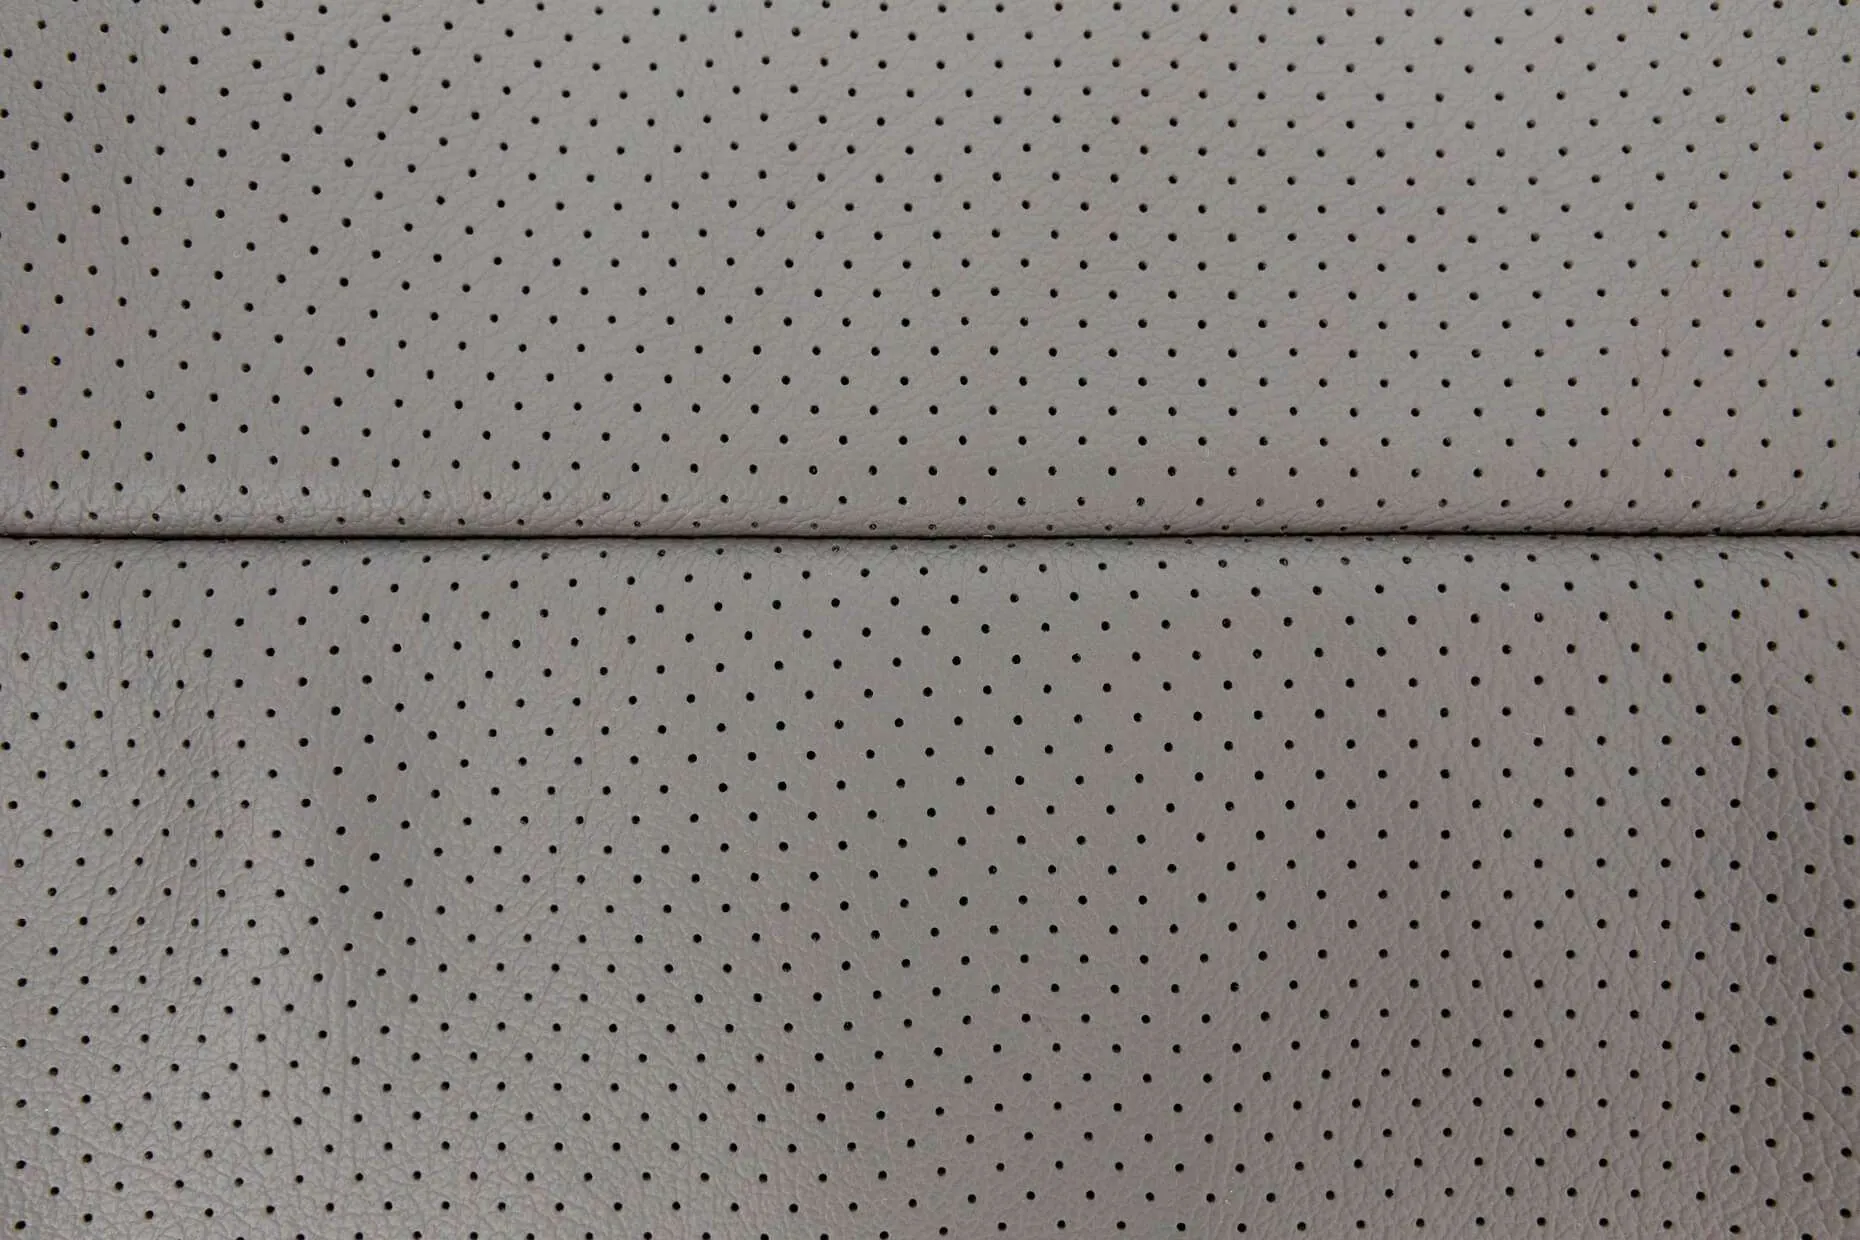 2014-2018 Chevrolet Silverado Leather Kit - Black & Light Grey - Perforation close-up